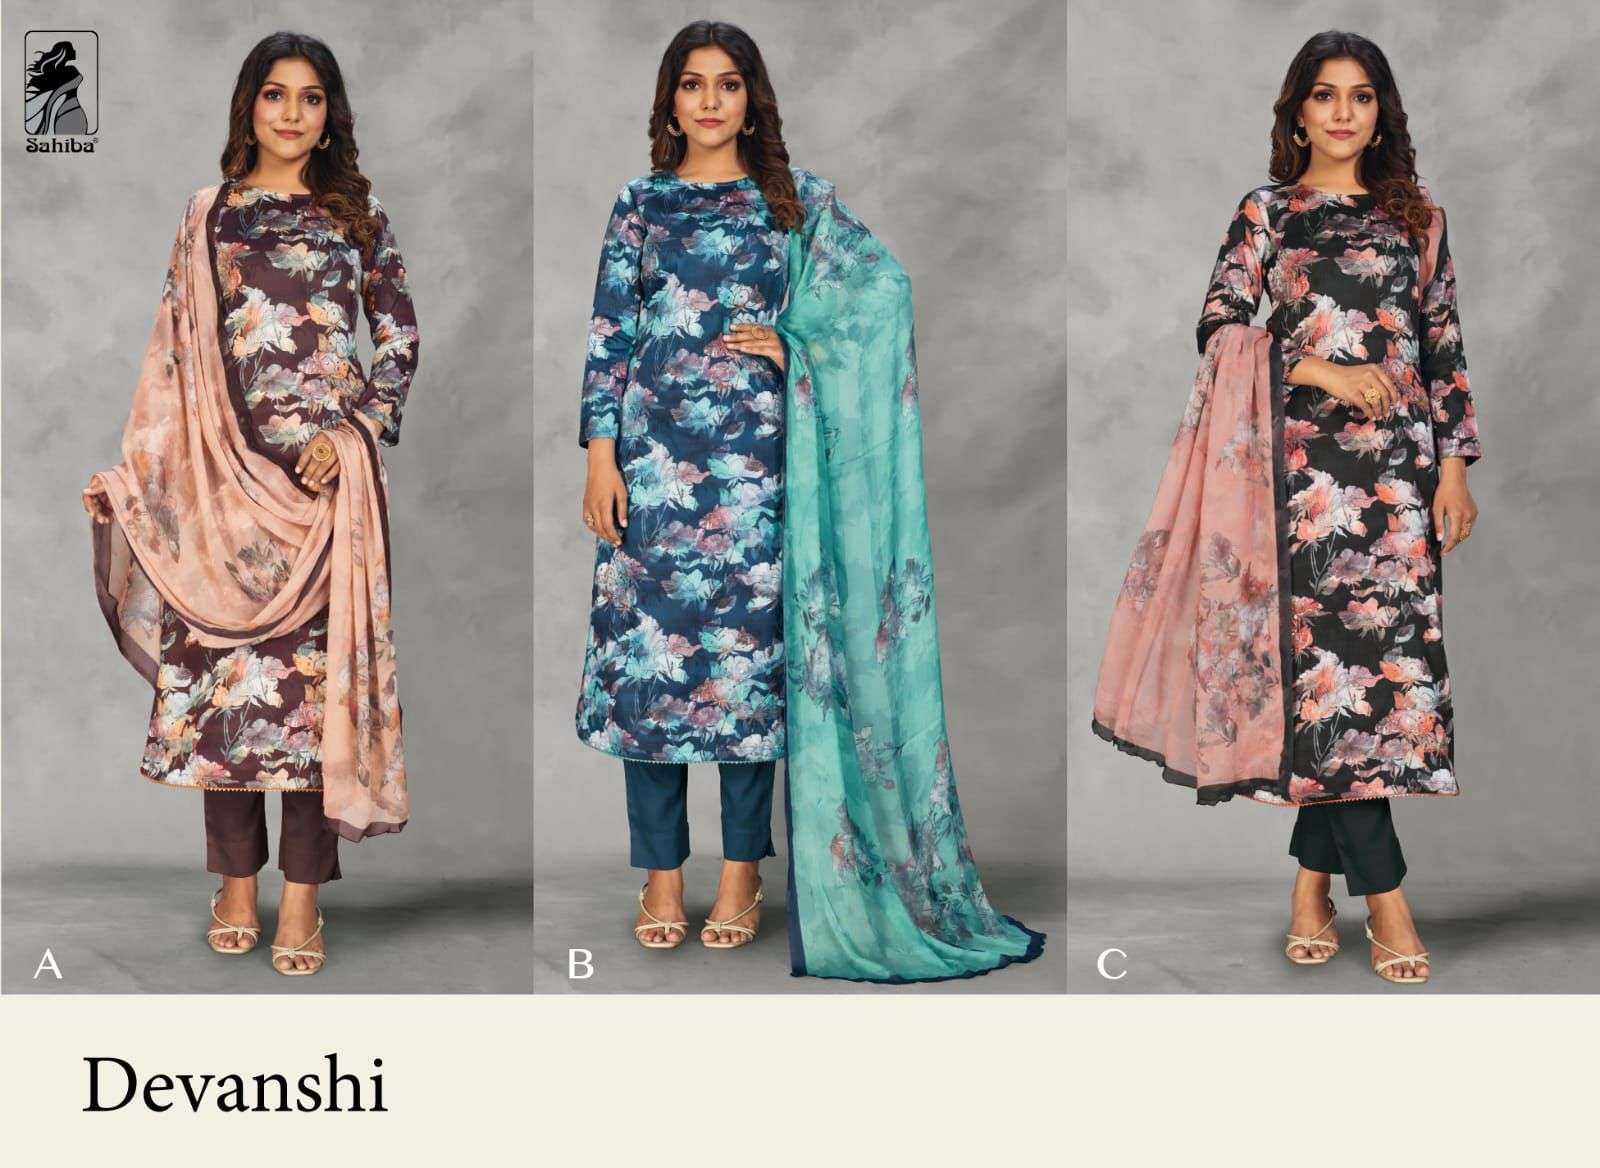 sahiba devanshi cotton satin digital printed with work dress material wholesale price surat